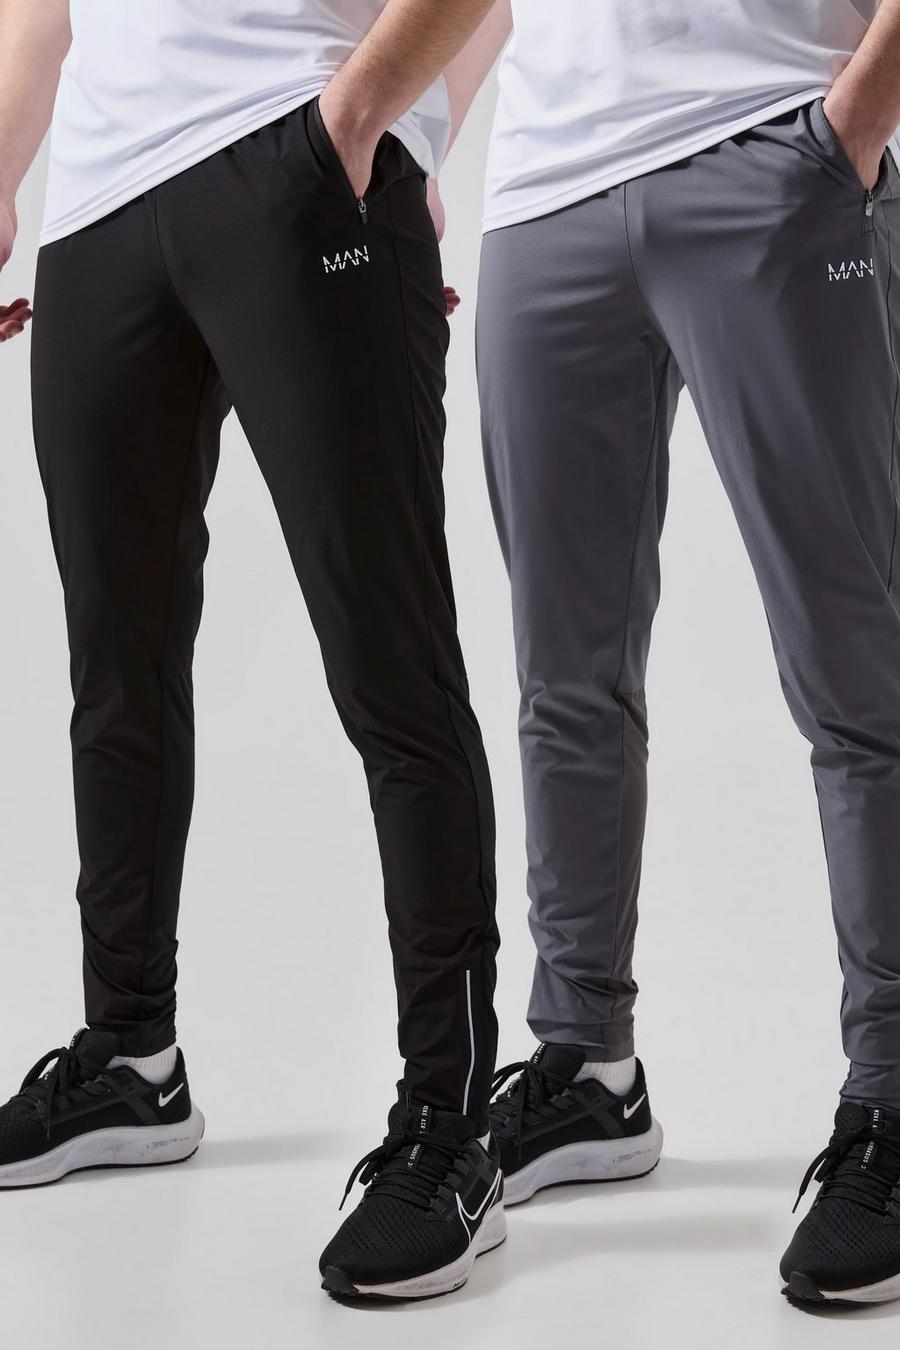 Pack de 2 pantalones de chándal Tall MAN Active deportivos ligeros, Black image number 1